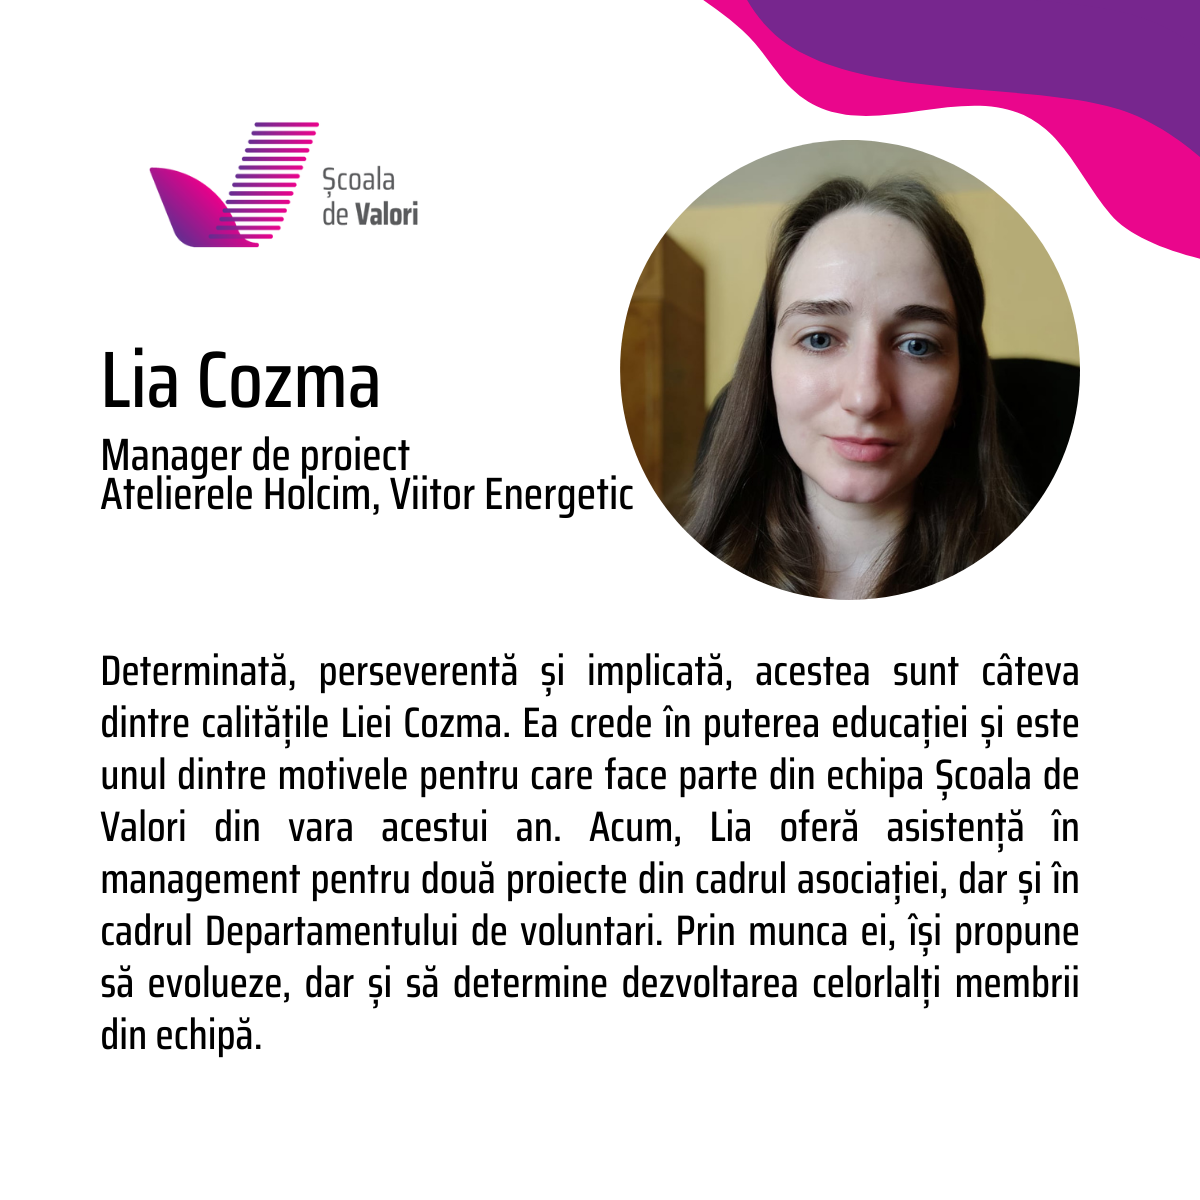 Lia Cozma